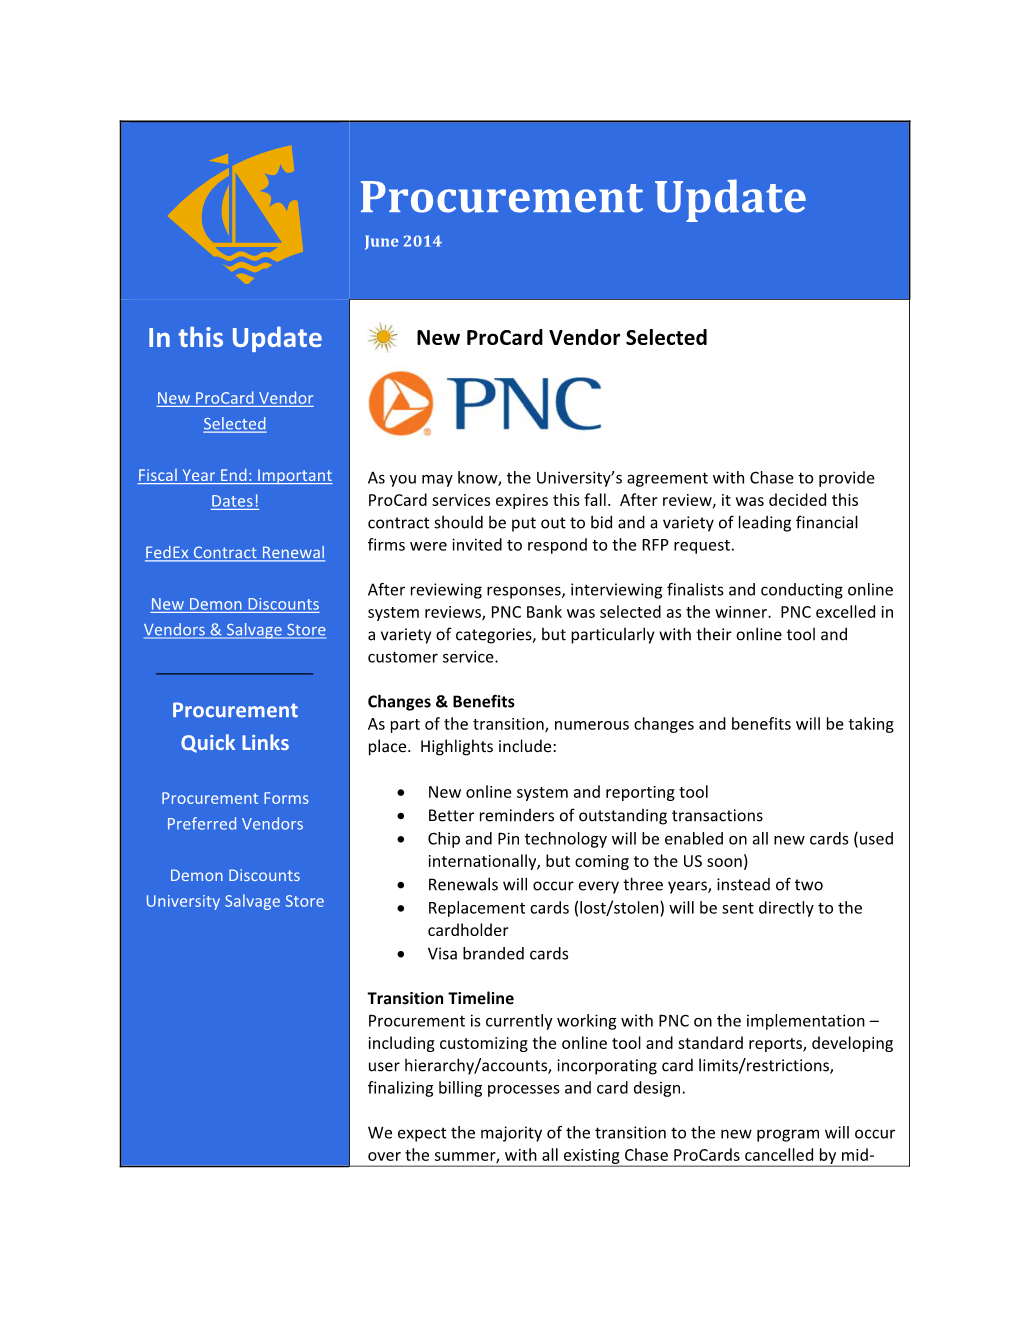 Procurement Update June 2014